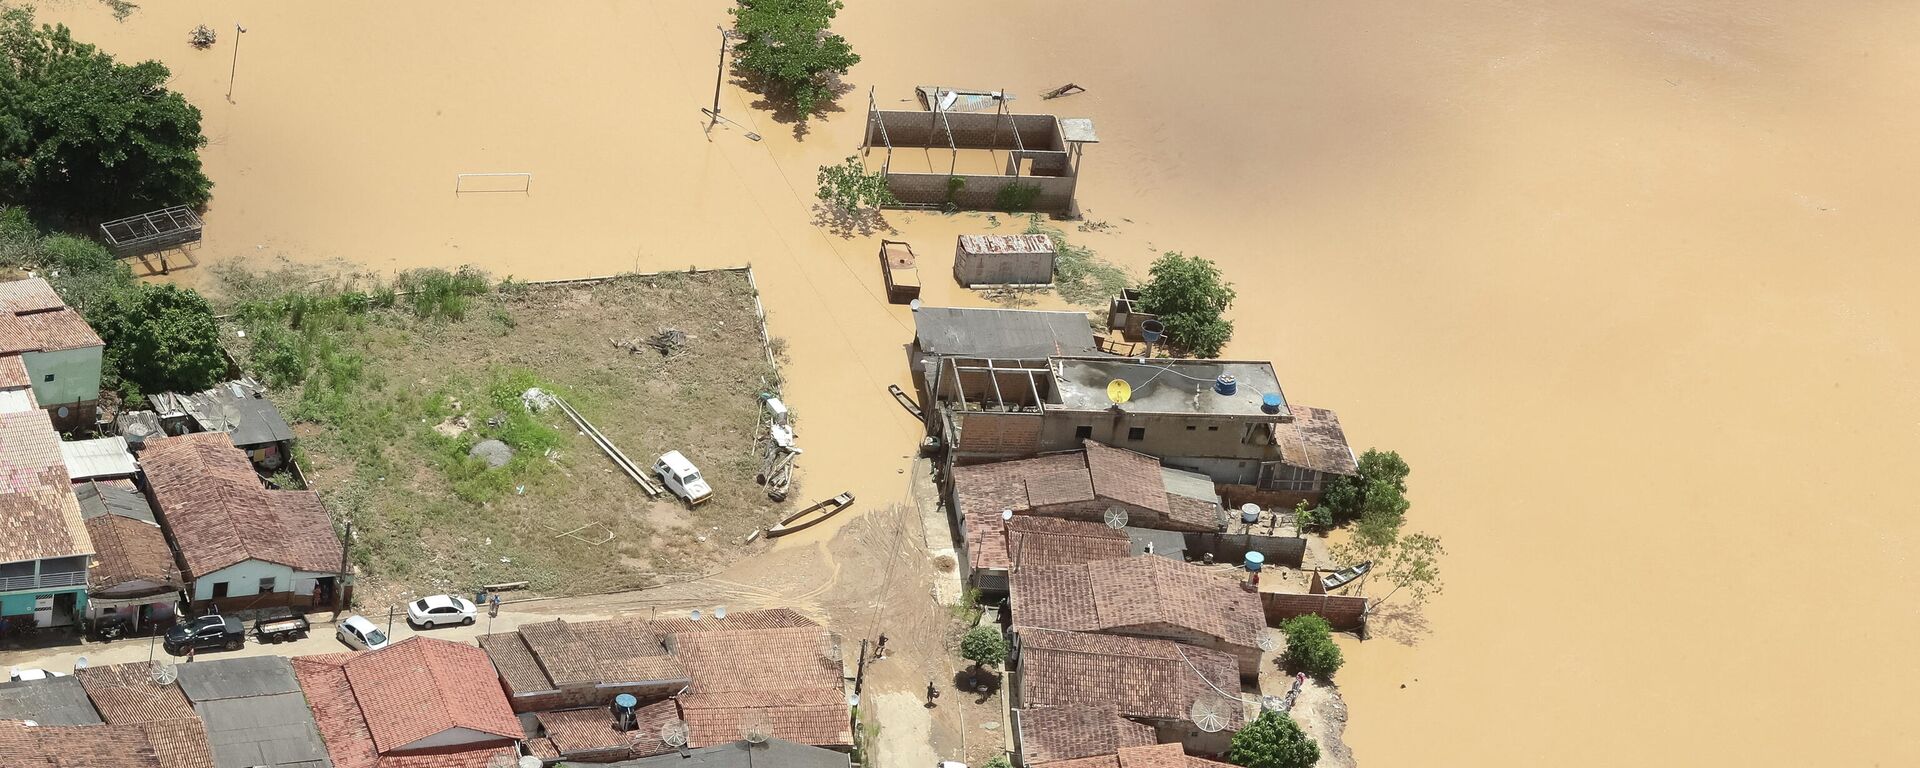 Vista geral da área inundada perto de Porto Seguro, Bahia, 12 de dezembro de 2021  - Sputnik Brasil, 1920, 29.12.2021